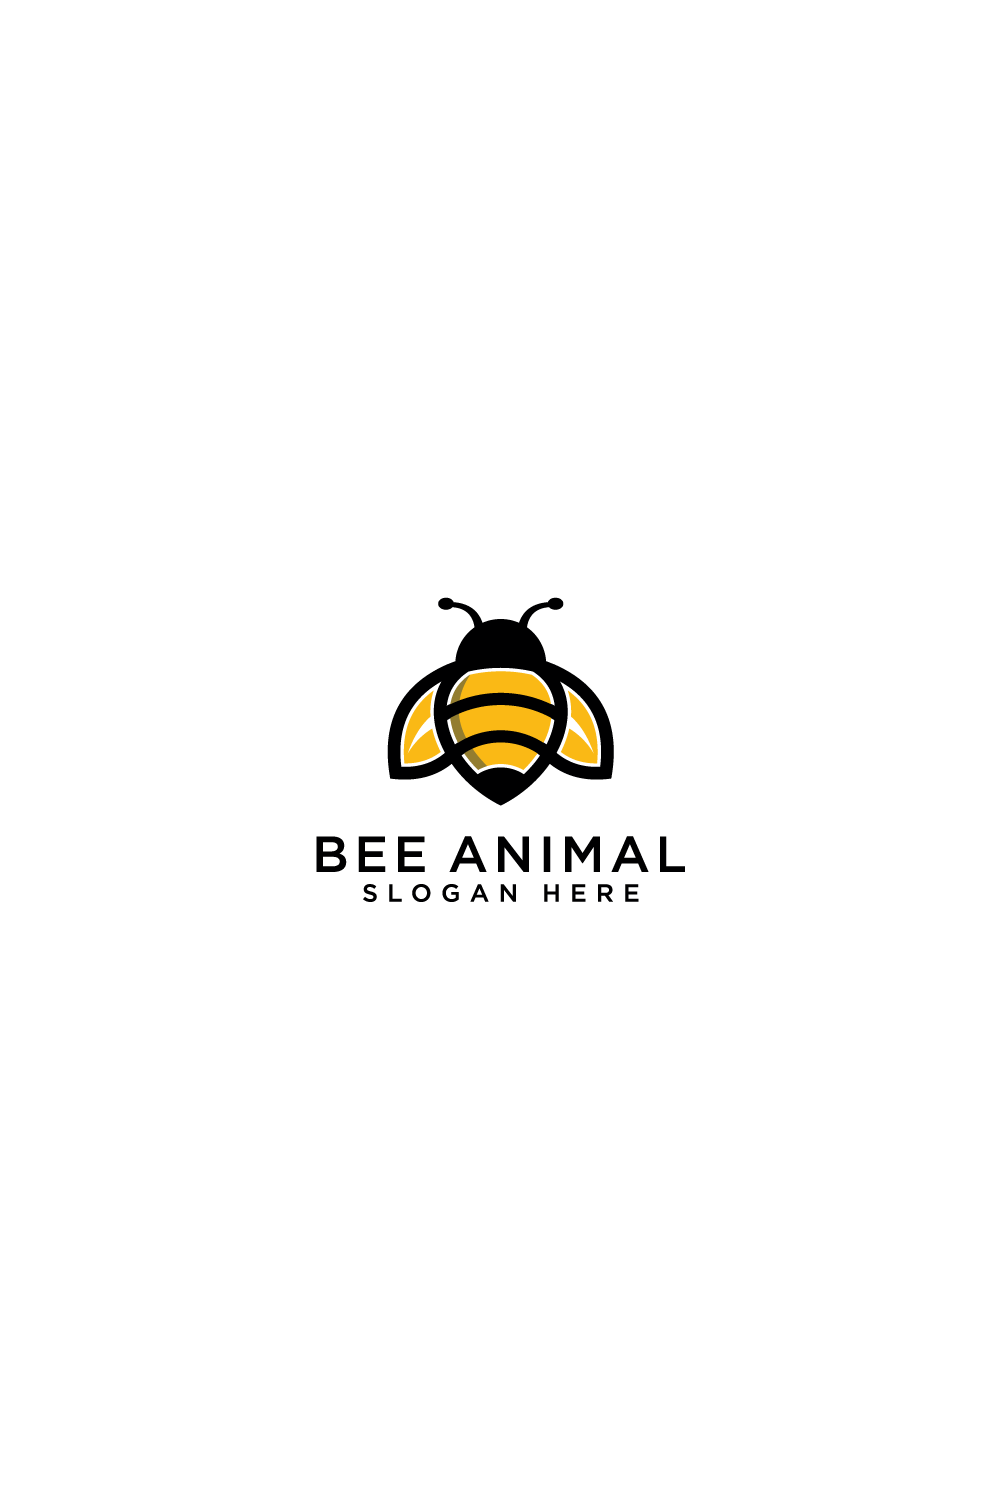 honey Bee animals logo vector pinterest preview image.